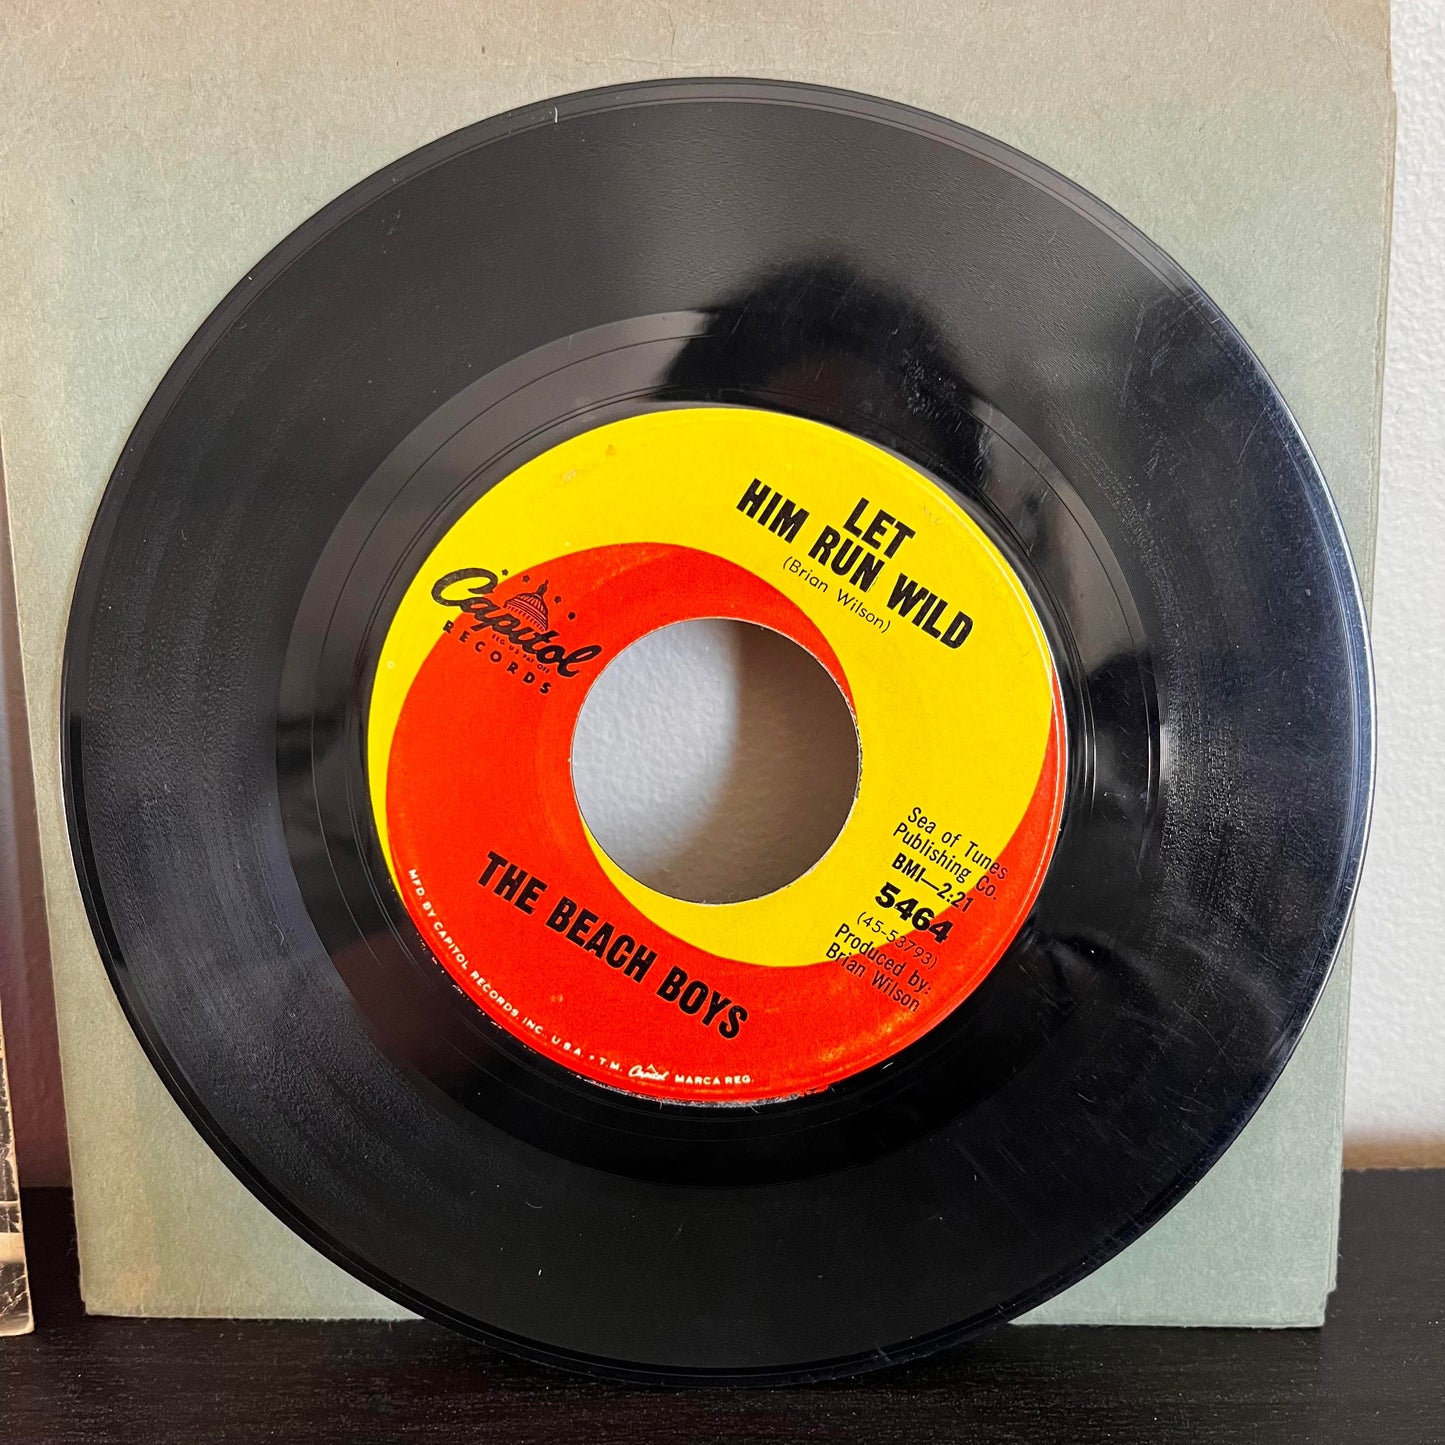 The Beach Boys California Girls/Let Him Run Wild 7" 45RPM Vinyl Capitol 5464 VG+